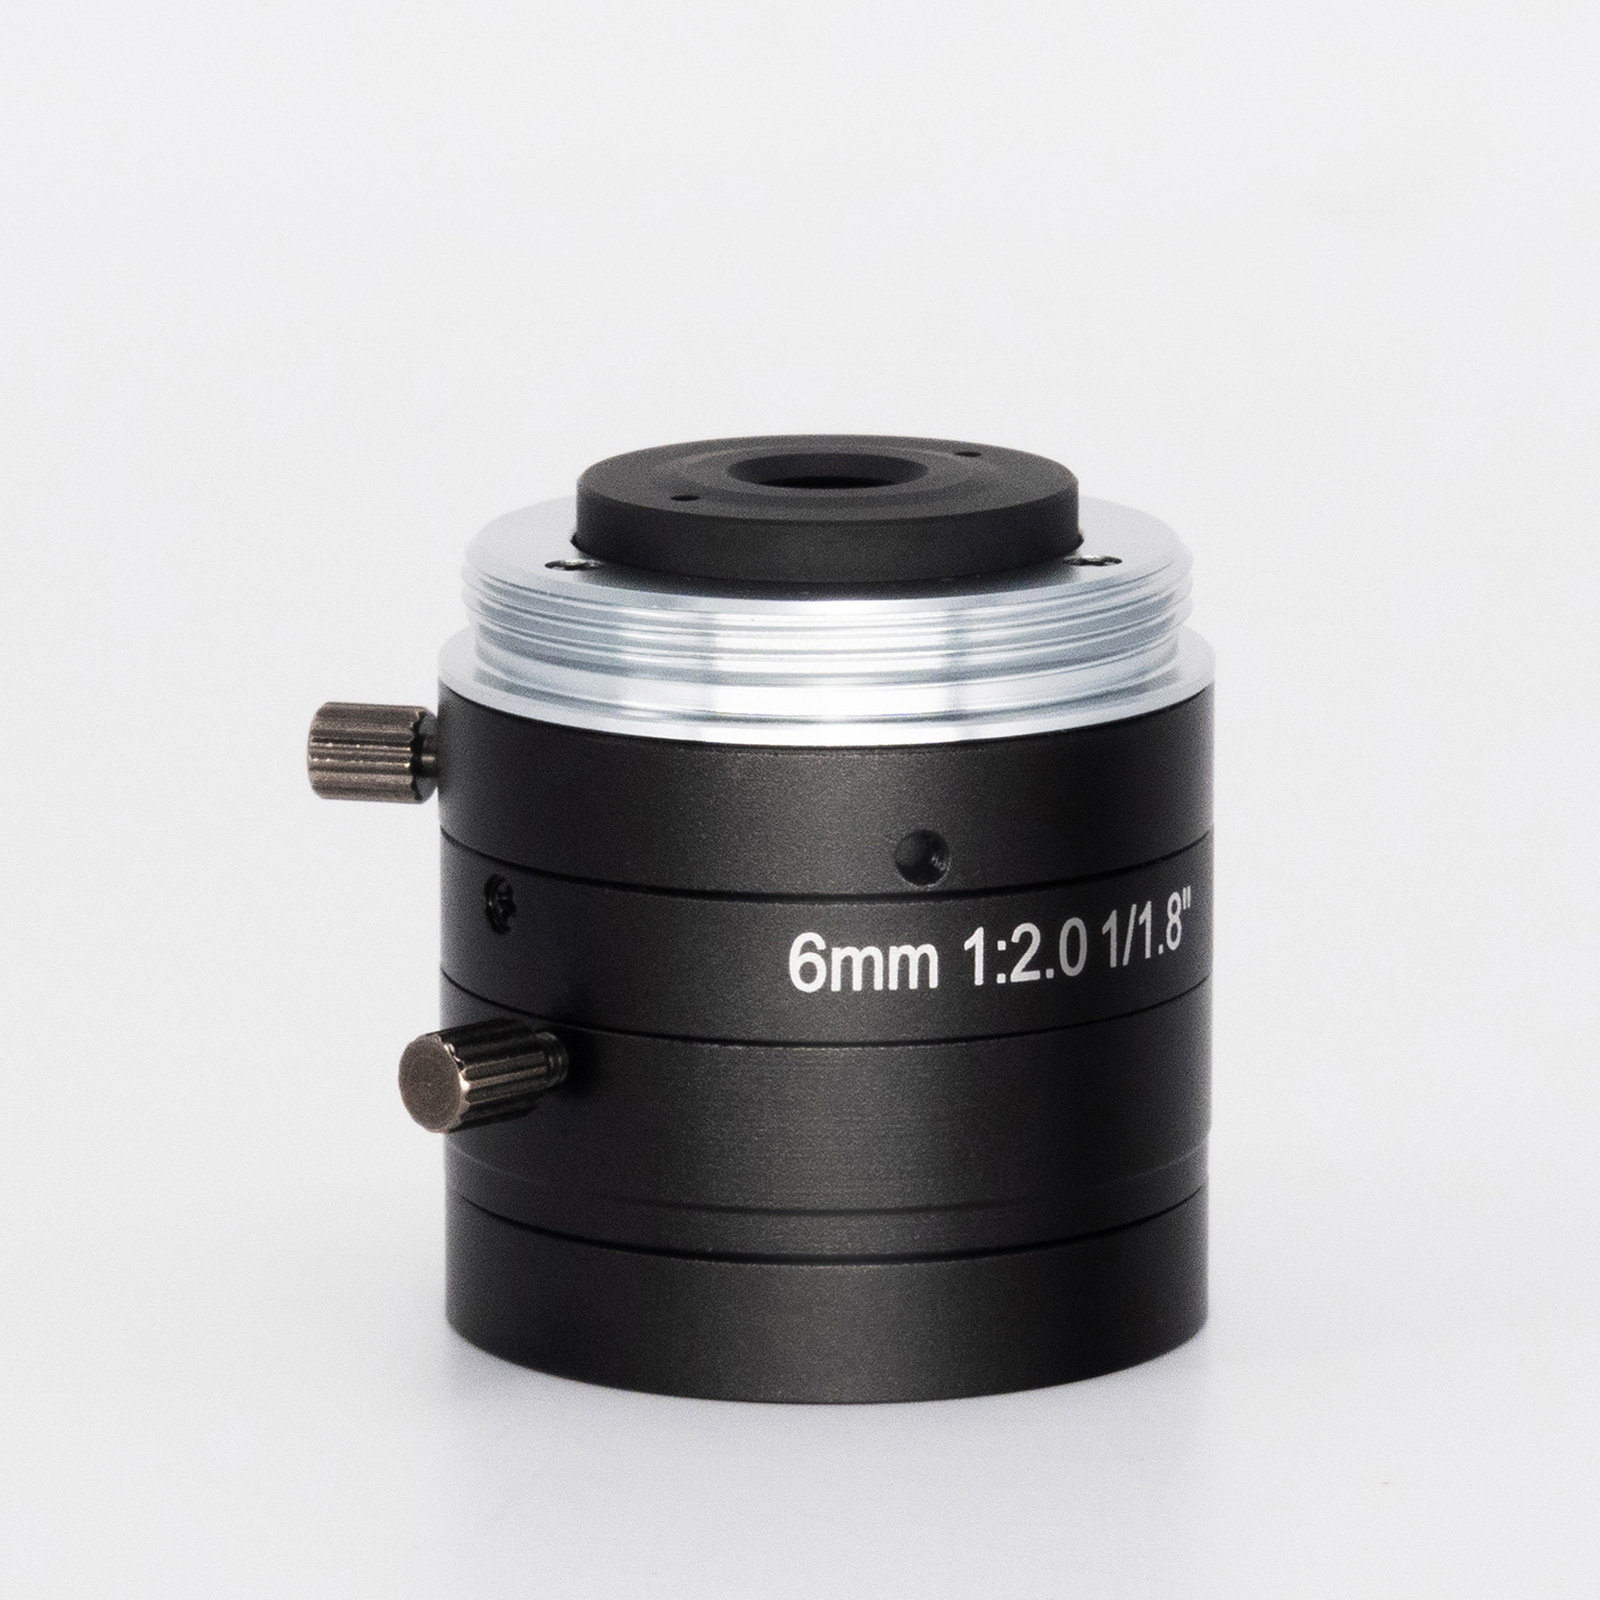 1/1.8" f6 Fixed Focus Lens